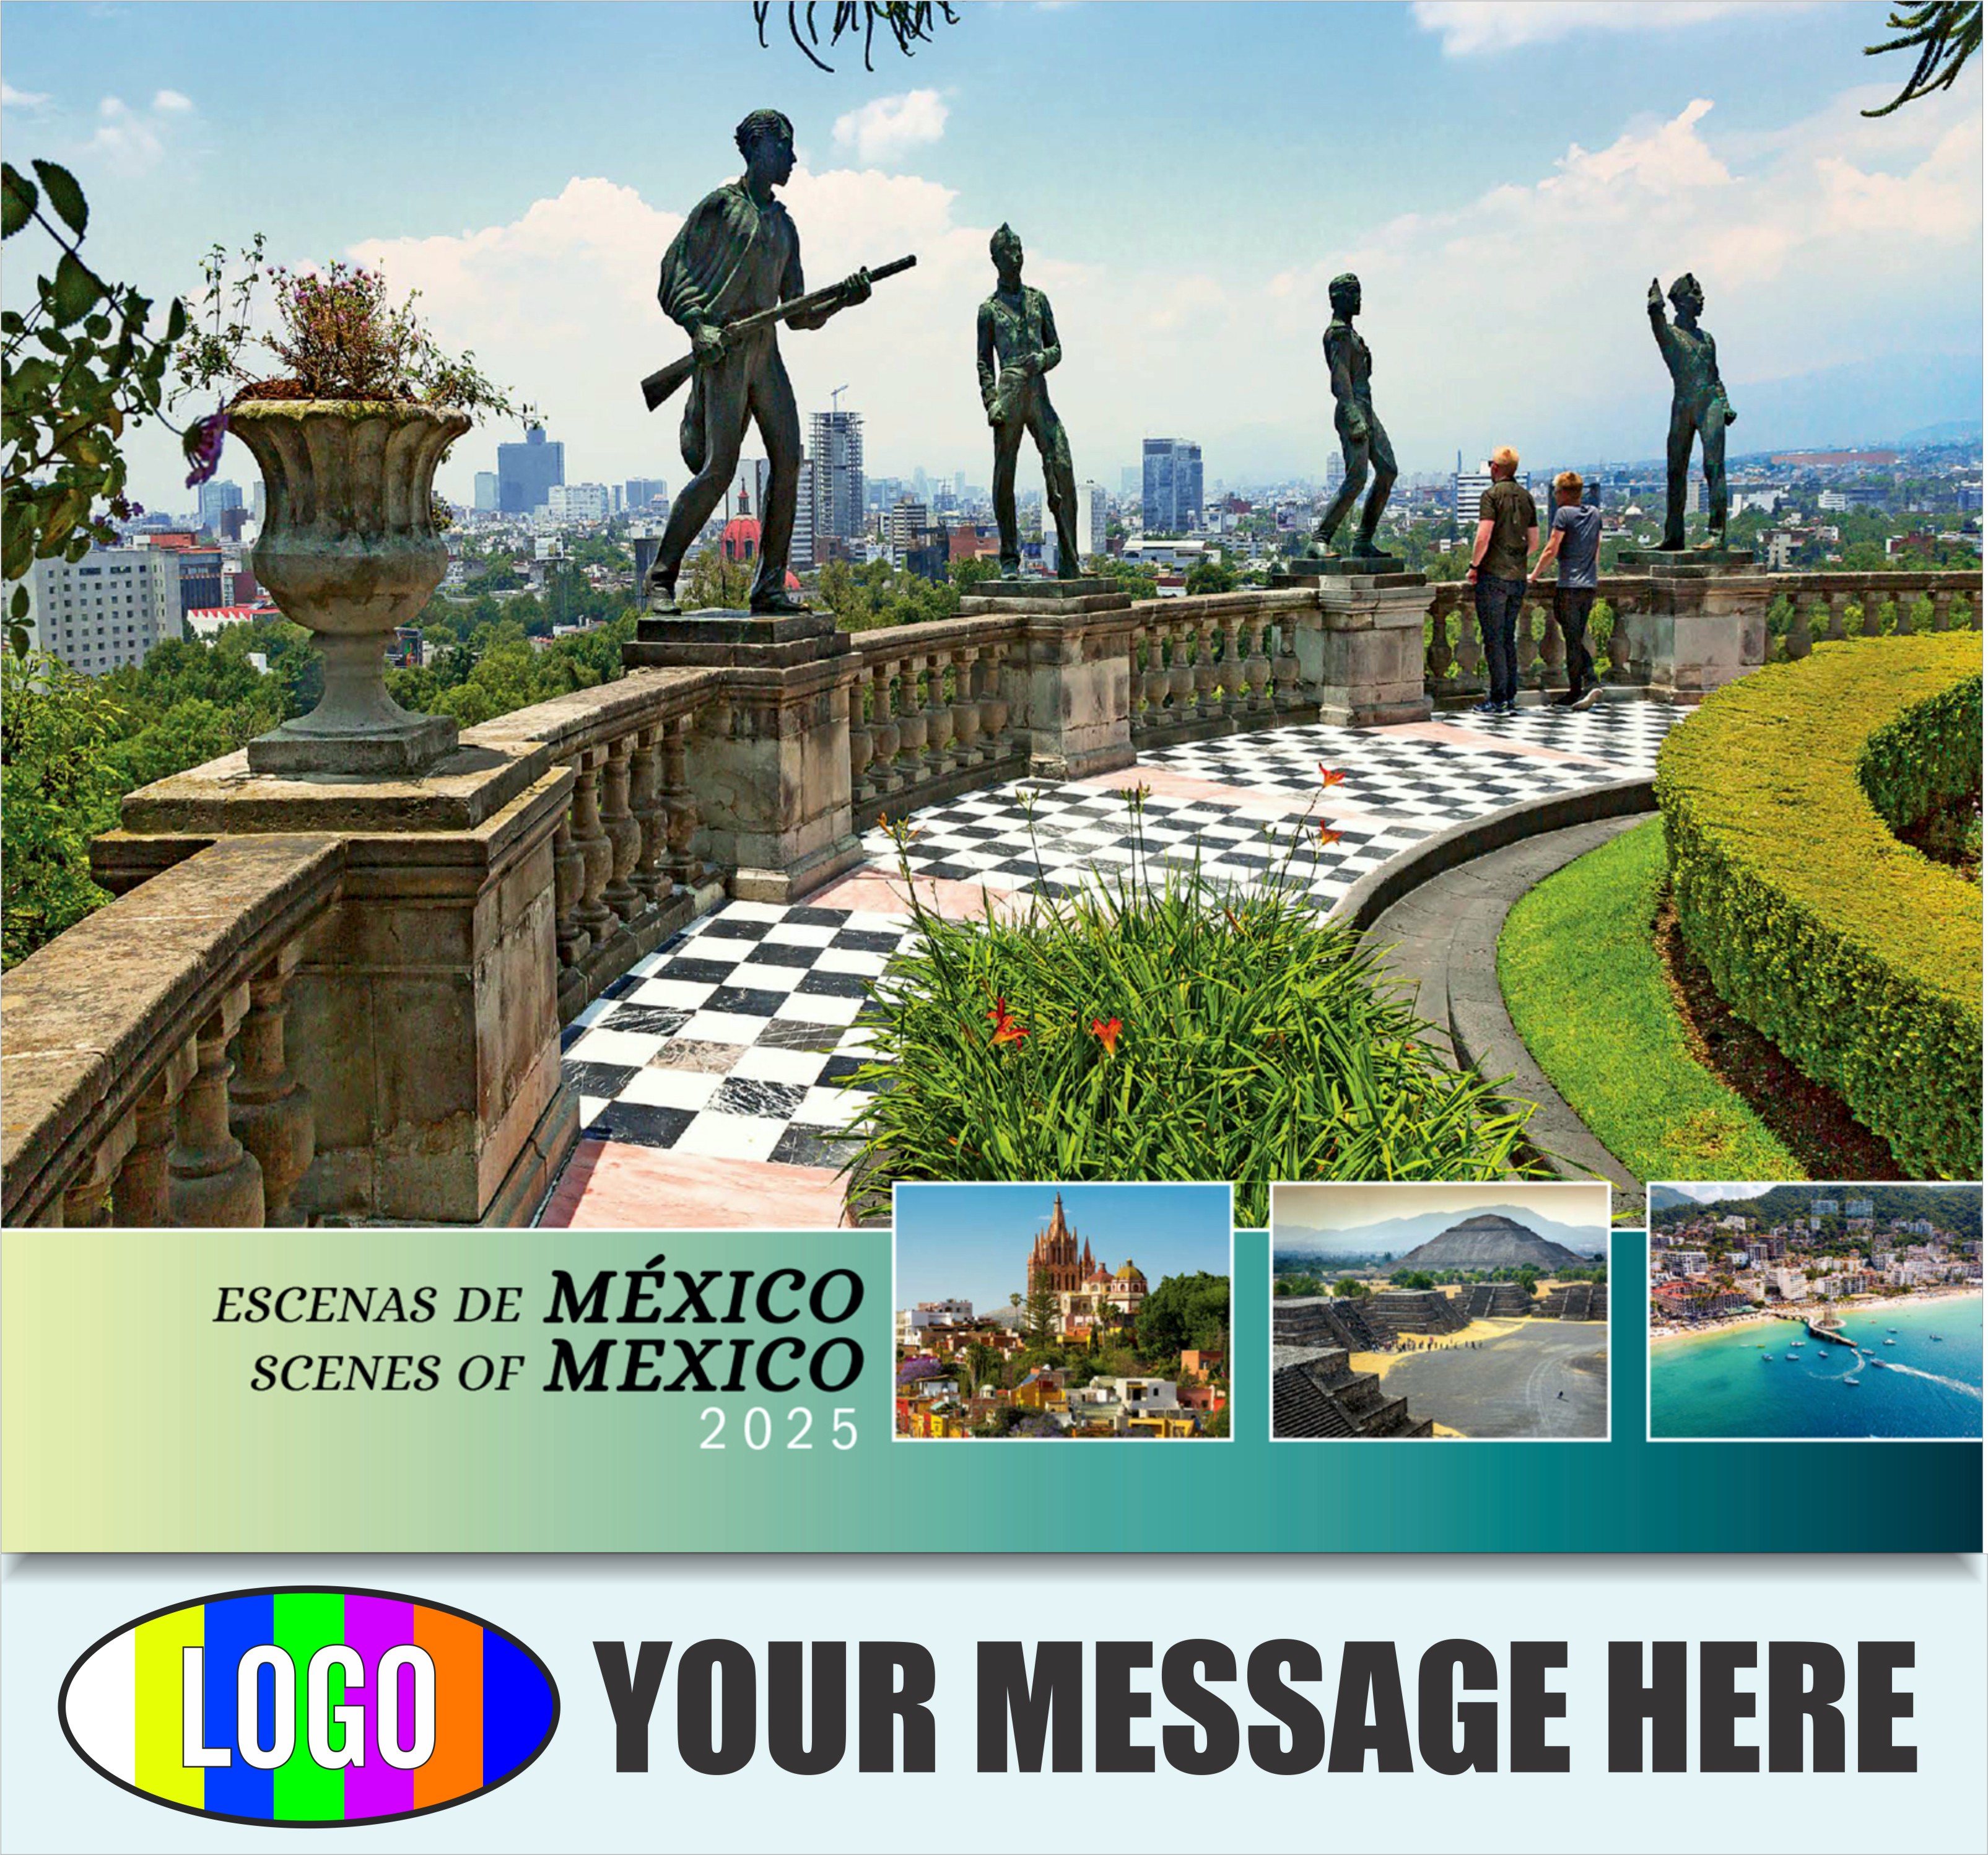 Scenes of Mexico (Spanish-English bilingual)